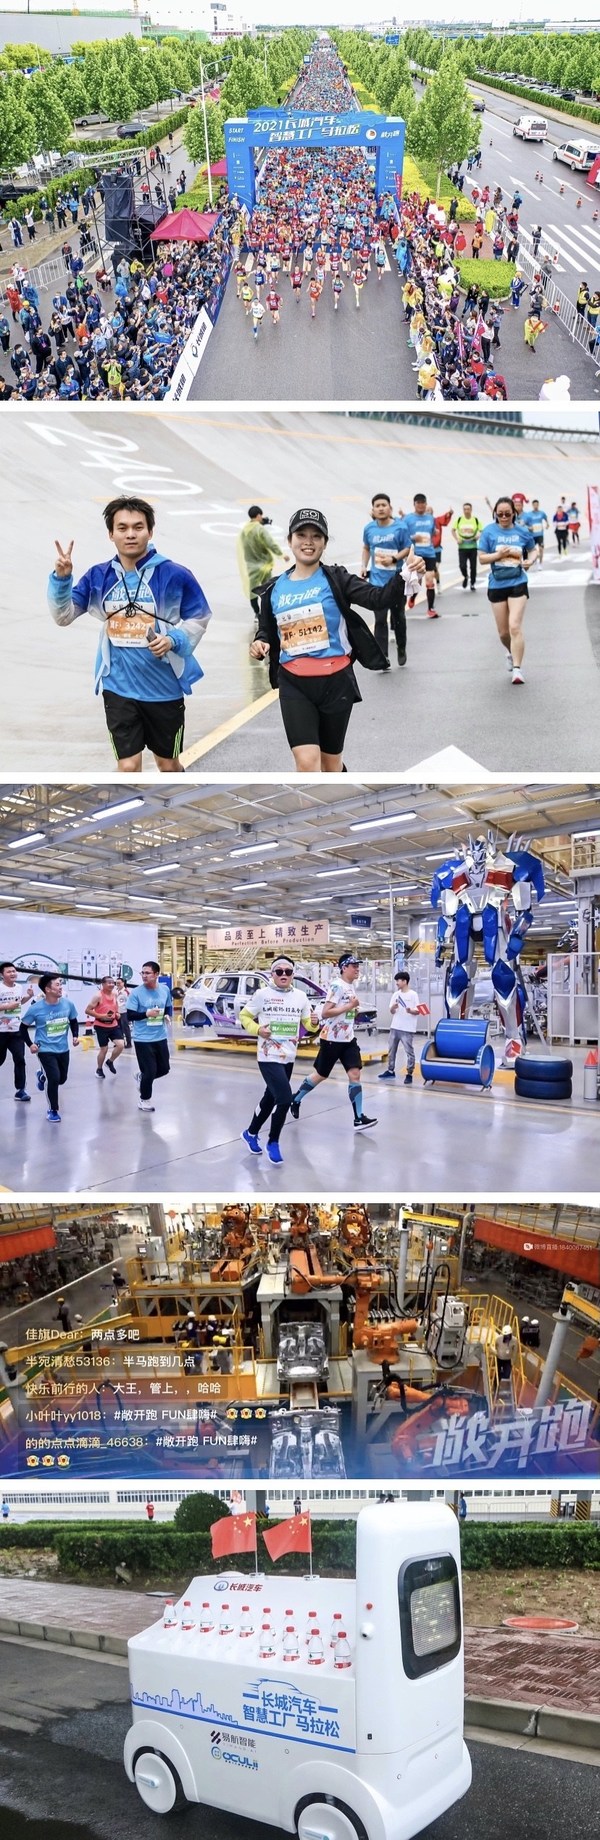 GWM hosts marathon in the smart factory to show its scientific charm